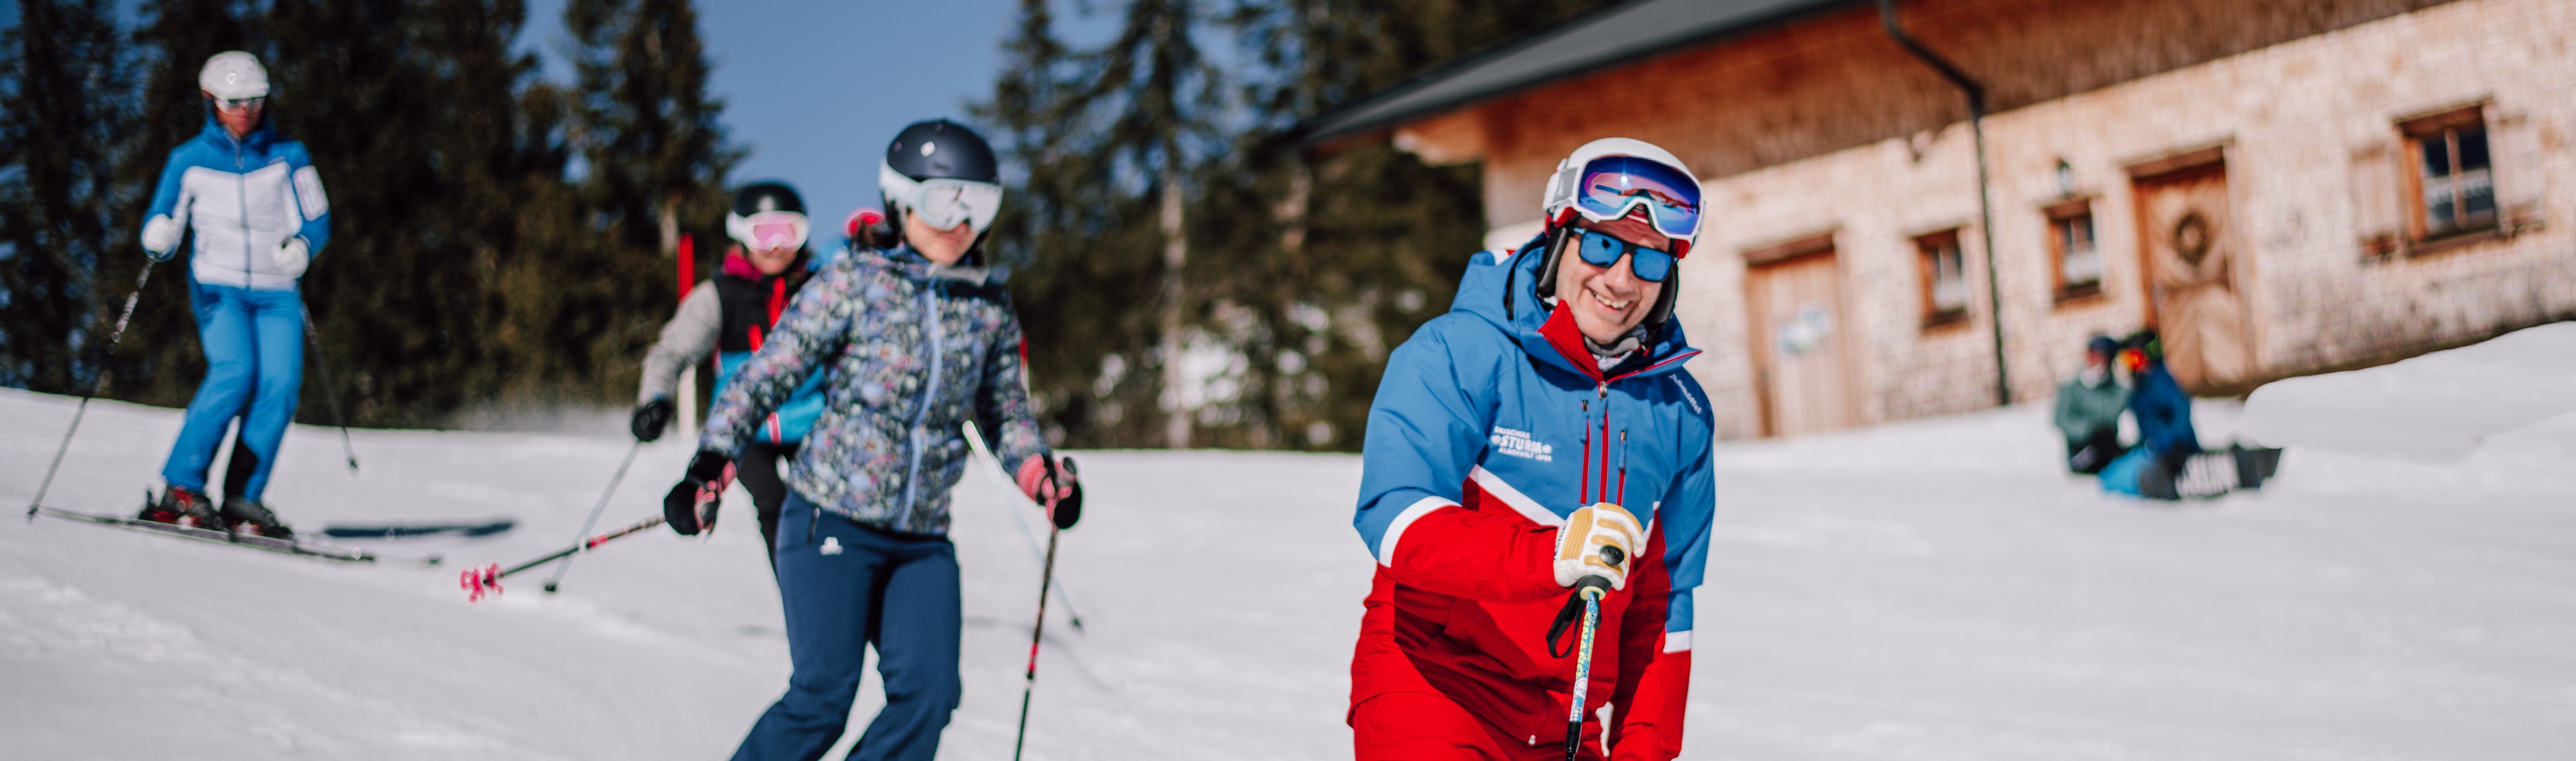 Skischule Lofer Erwachsenen Skikurs Almenwelt Lofer Skiverleih Intersport Sturm